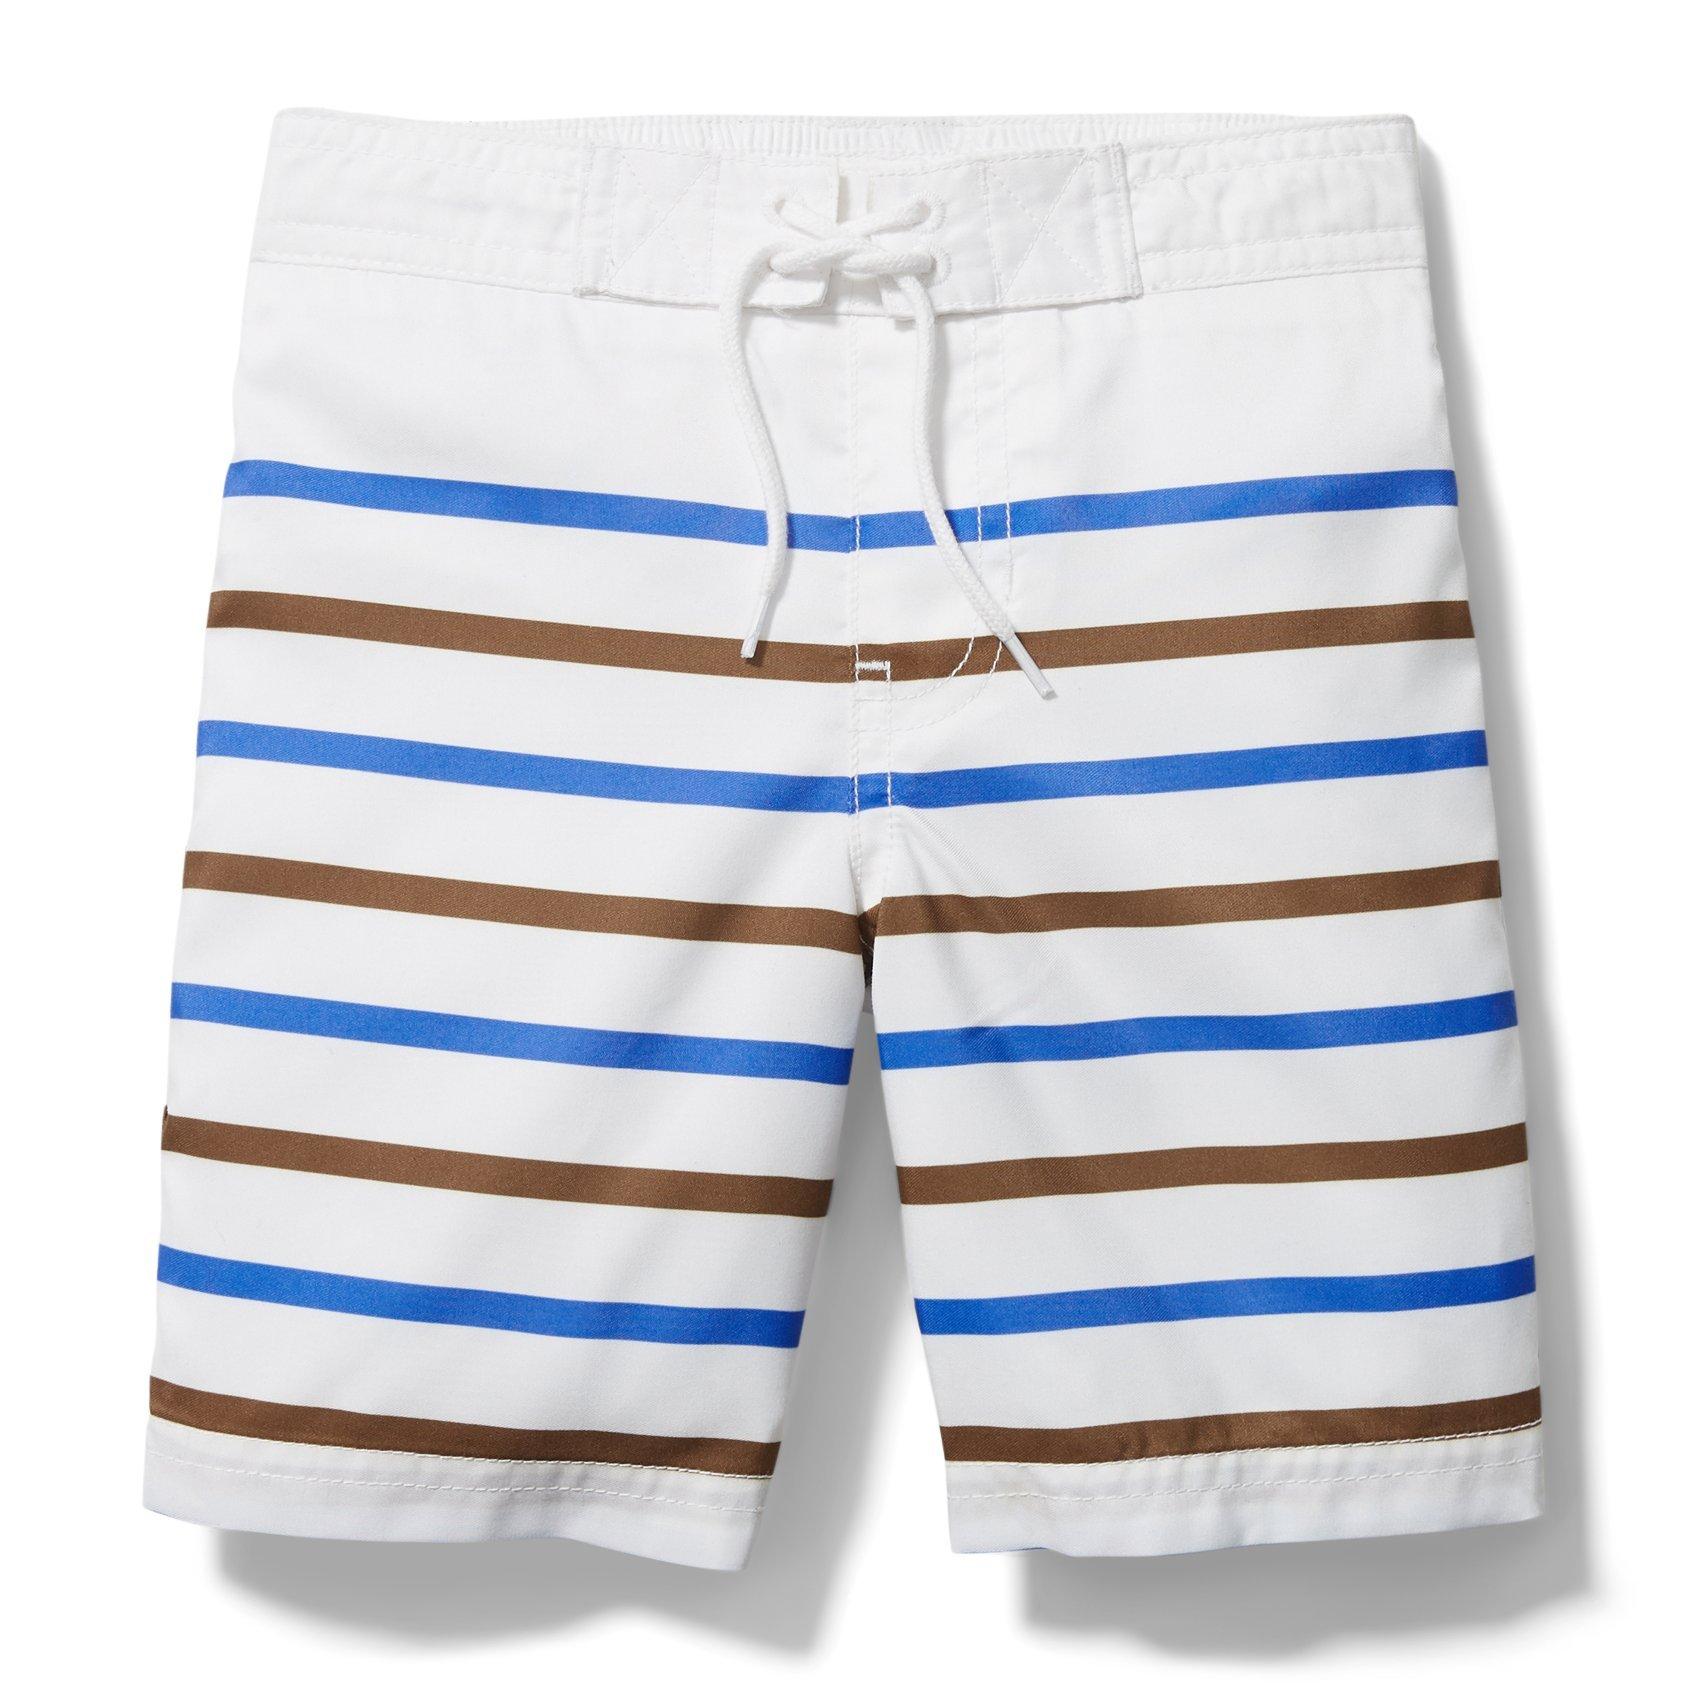 boy and girl matching swimwear, brown and blue striped swim trunks